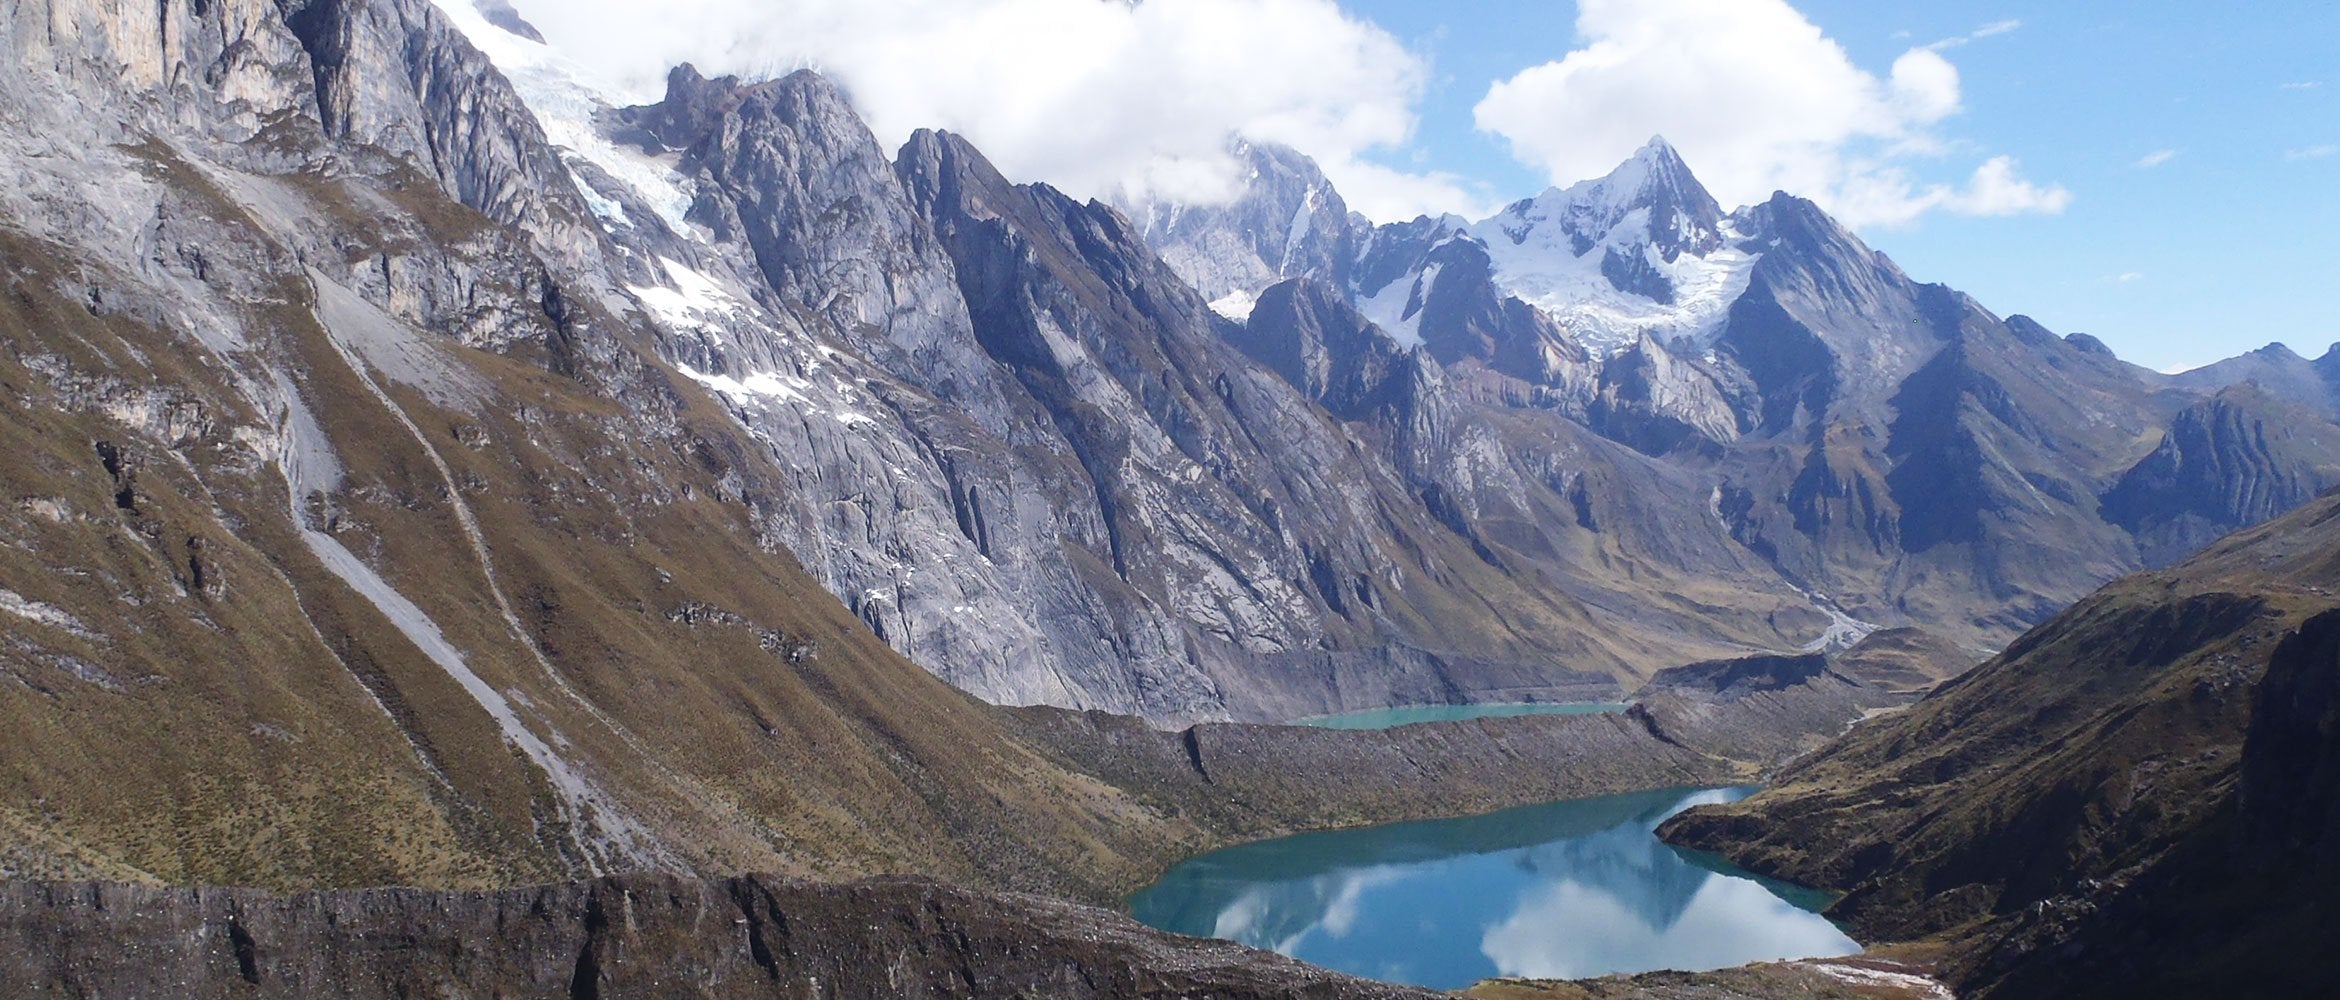 Trekking Peru’s Cordillera Huayhuash | WildBounds